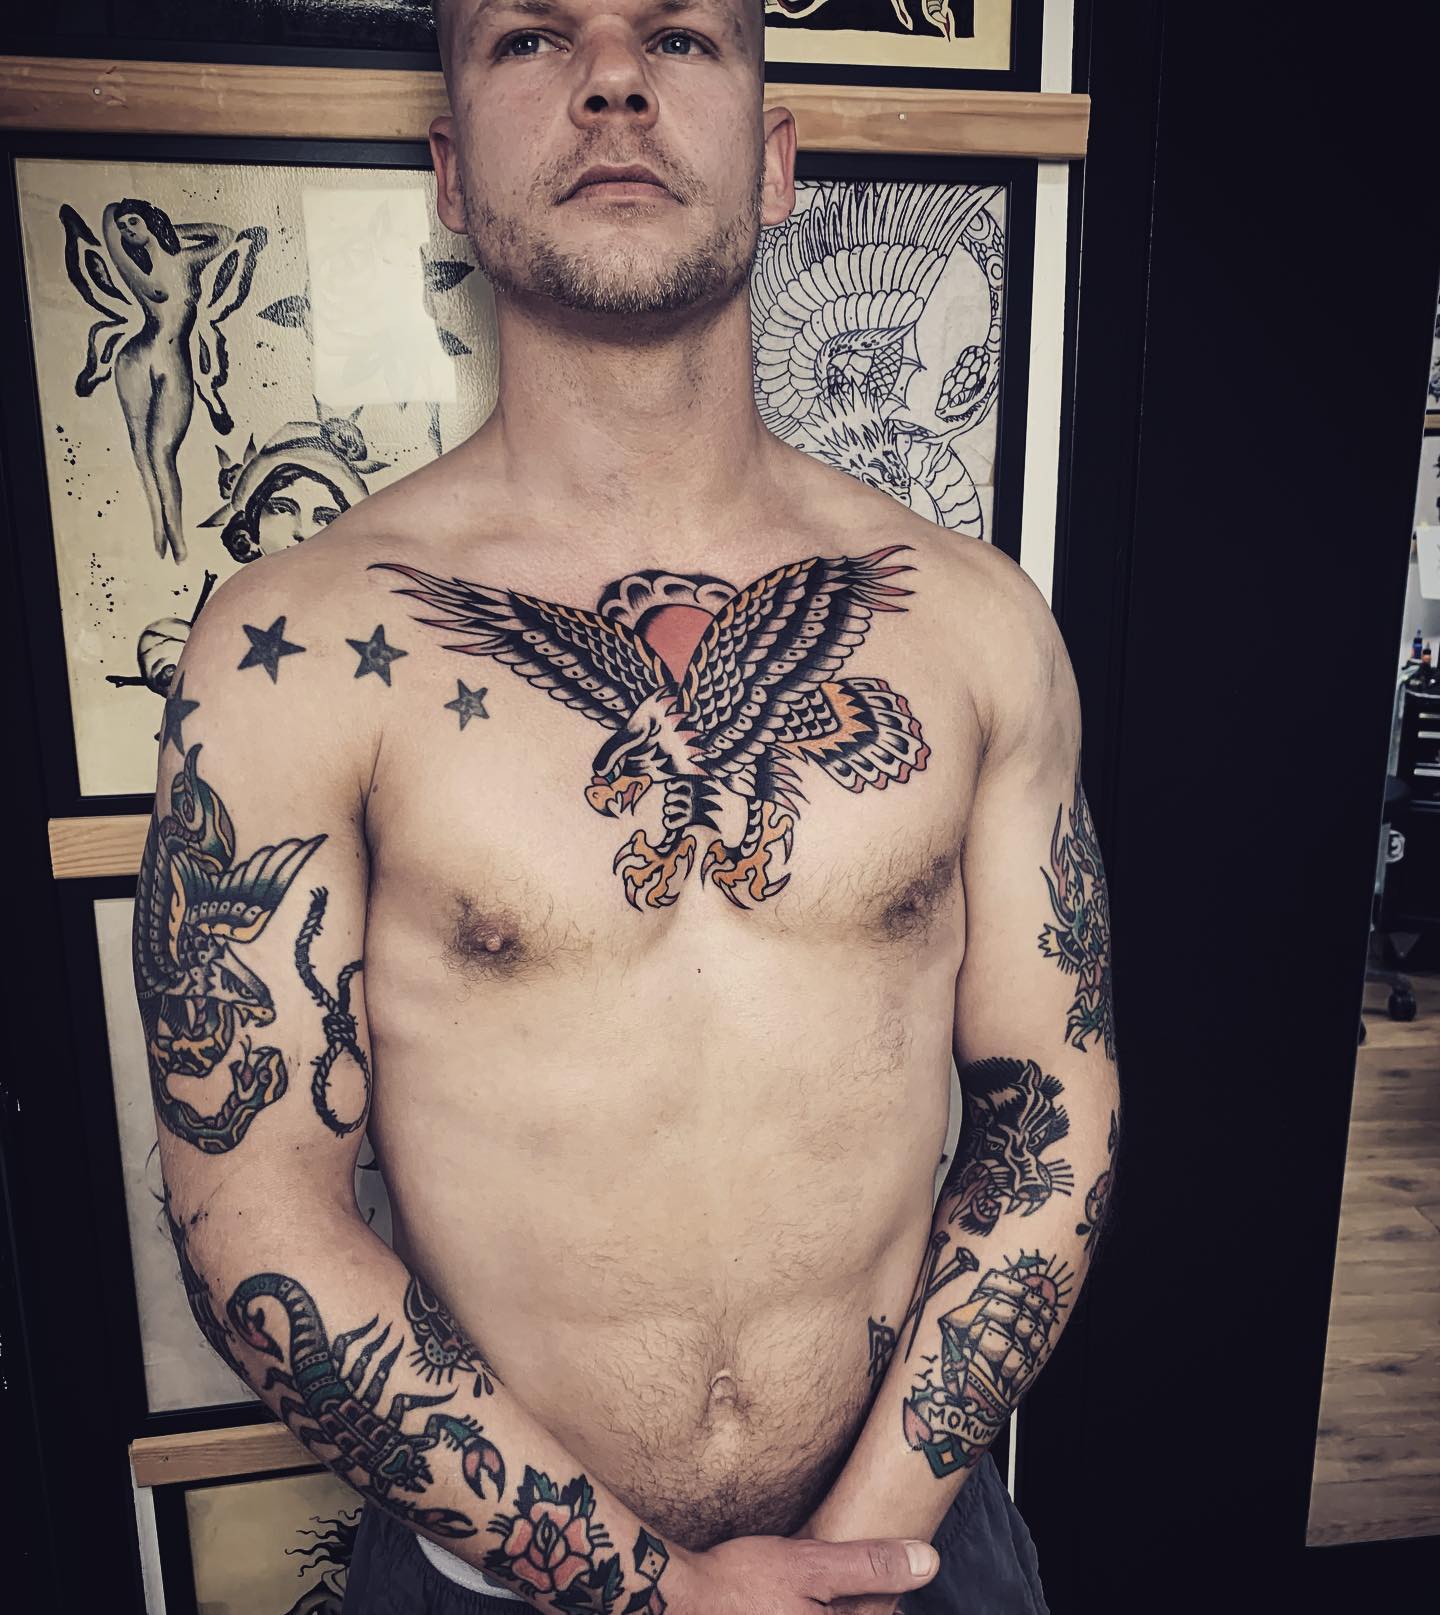 Instagram post from tattoojoris